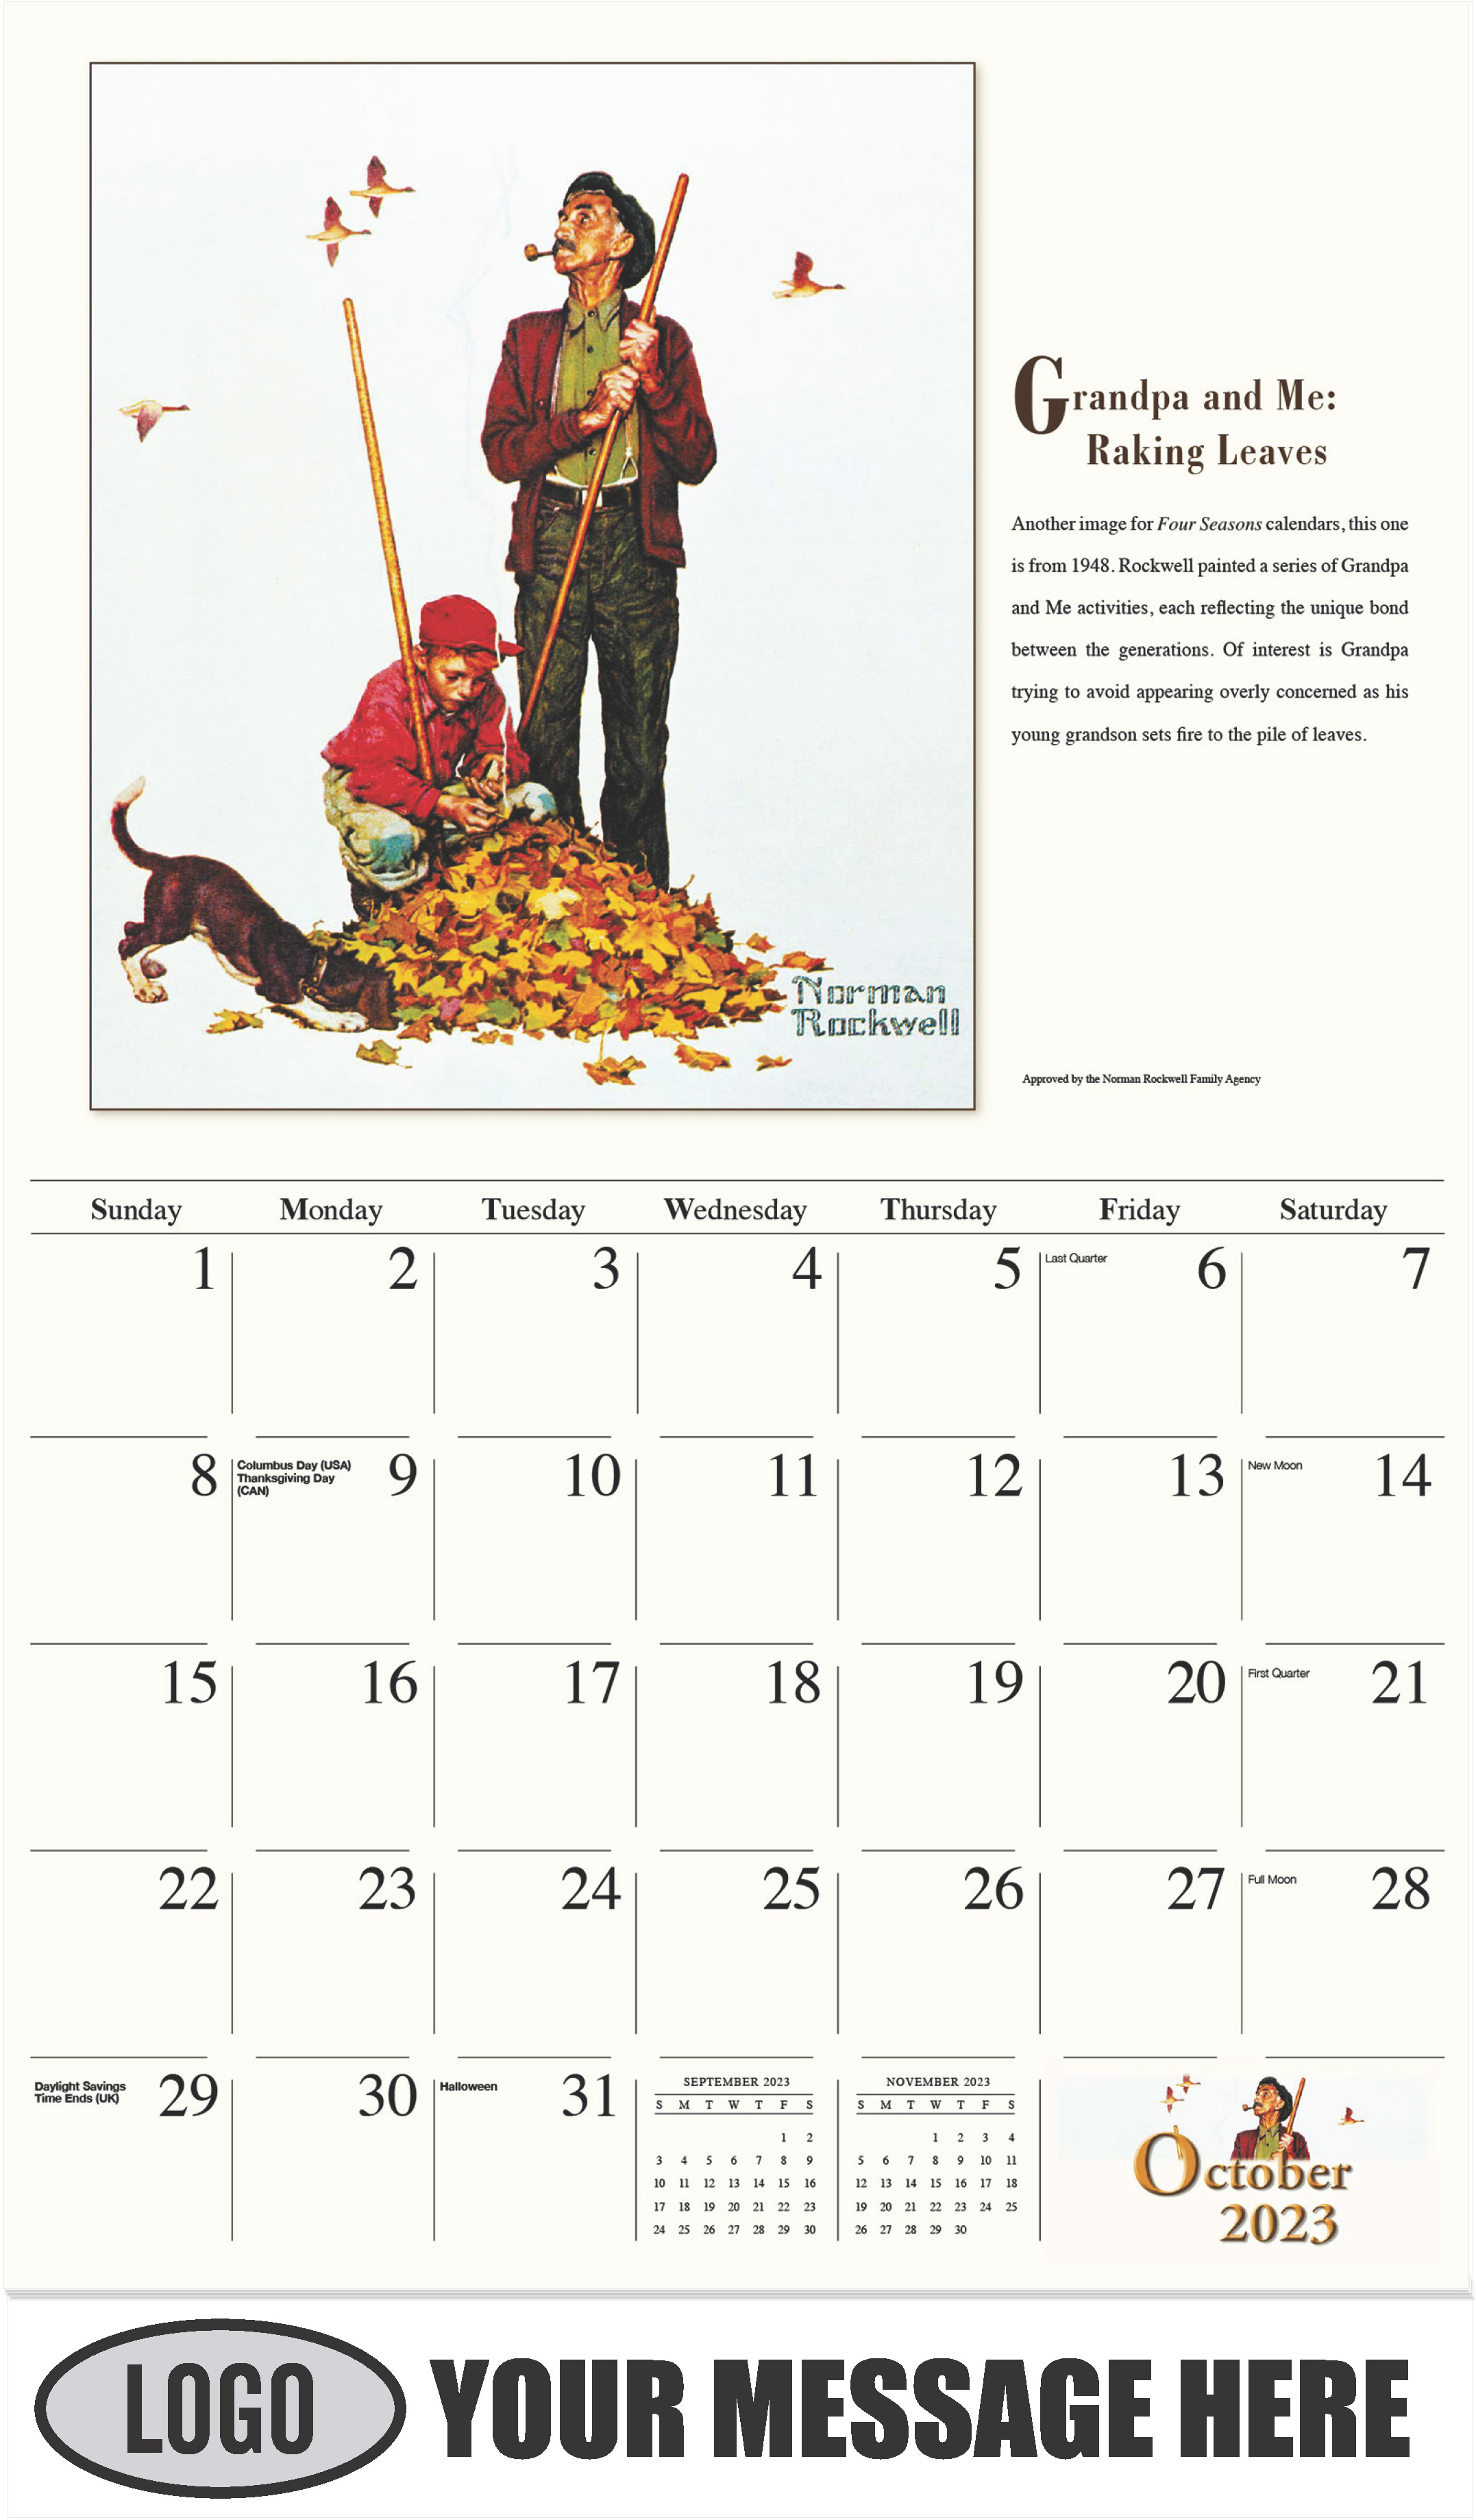 Grandpa and Me: Raking Leaves - October - Norman Rockwell - Memorable Images 2023 Promotional Calendar